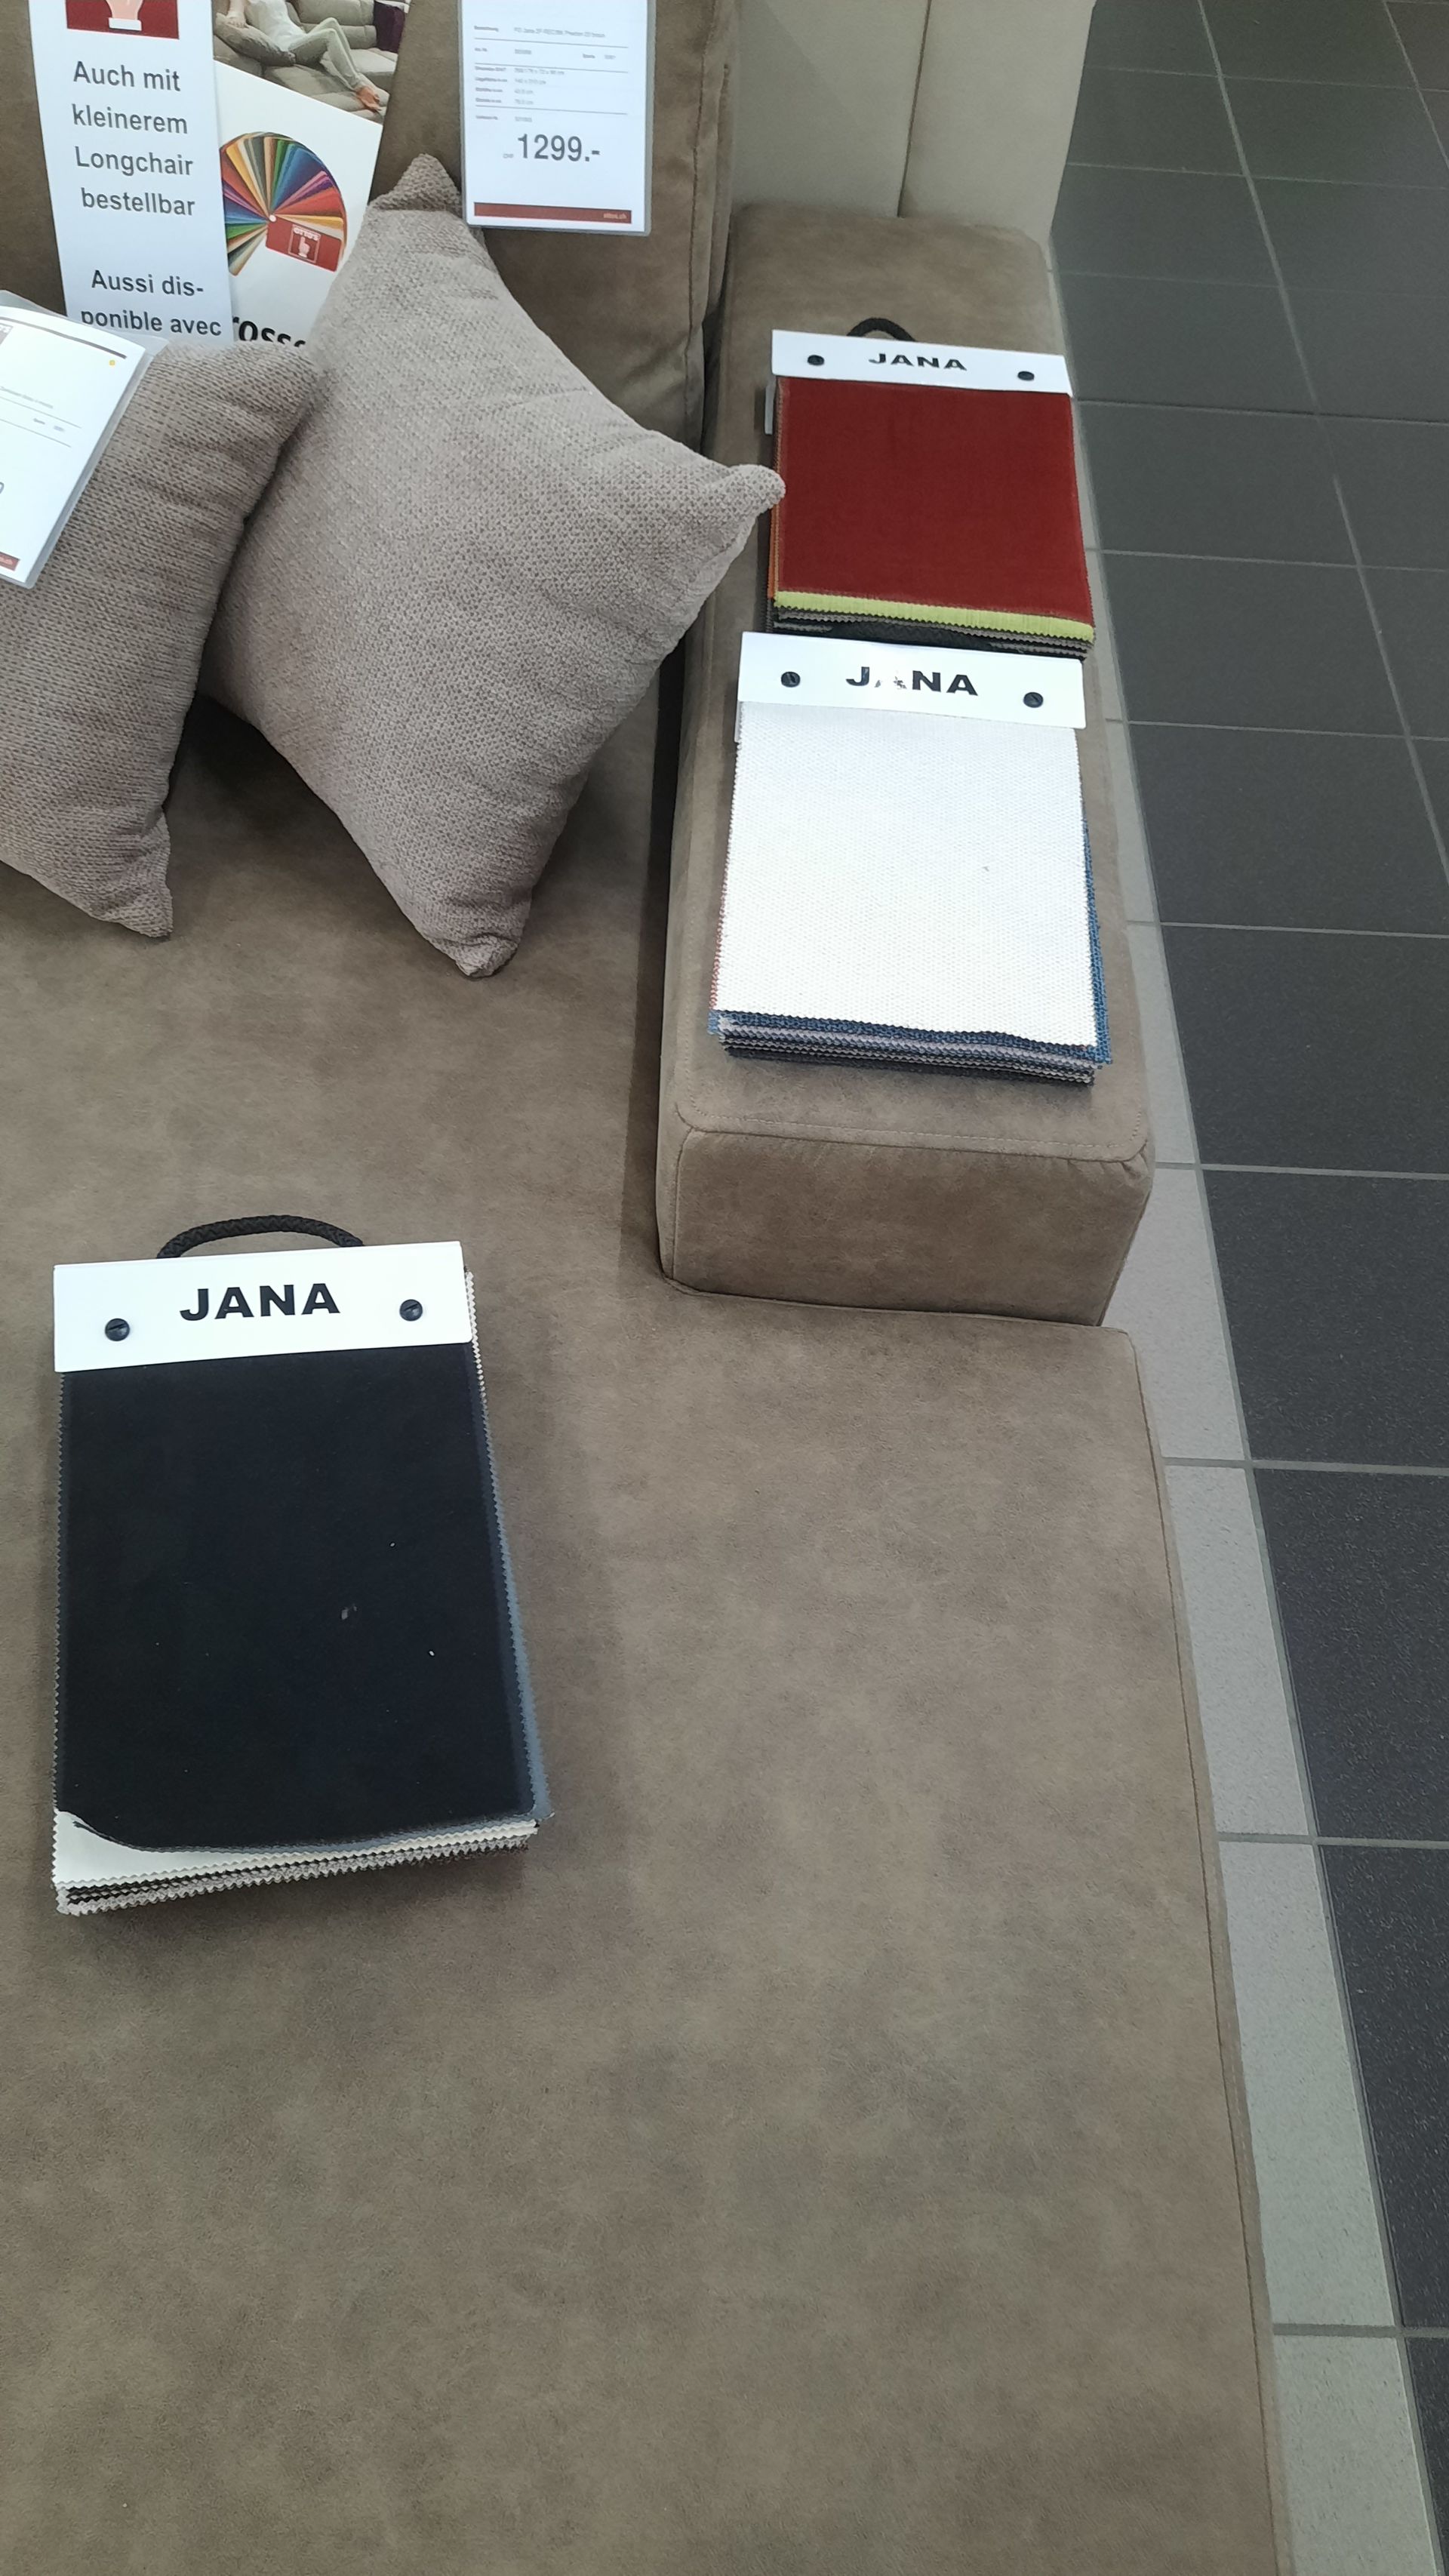 Auch mit
kleinerem
Longchair
bestellbar
OTERS
Aussi dis-
Donible avec Osse
JANA
1299.-
JANA
JANA